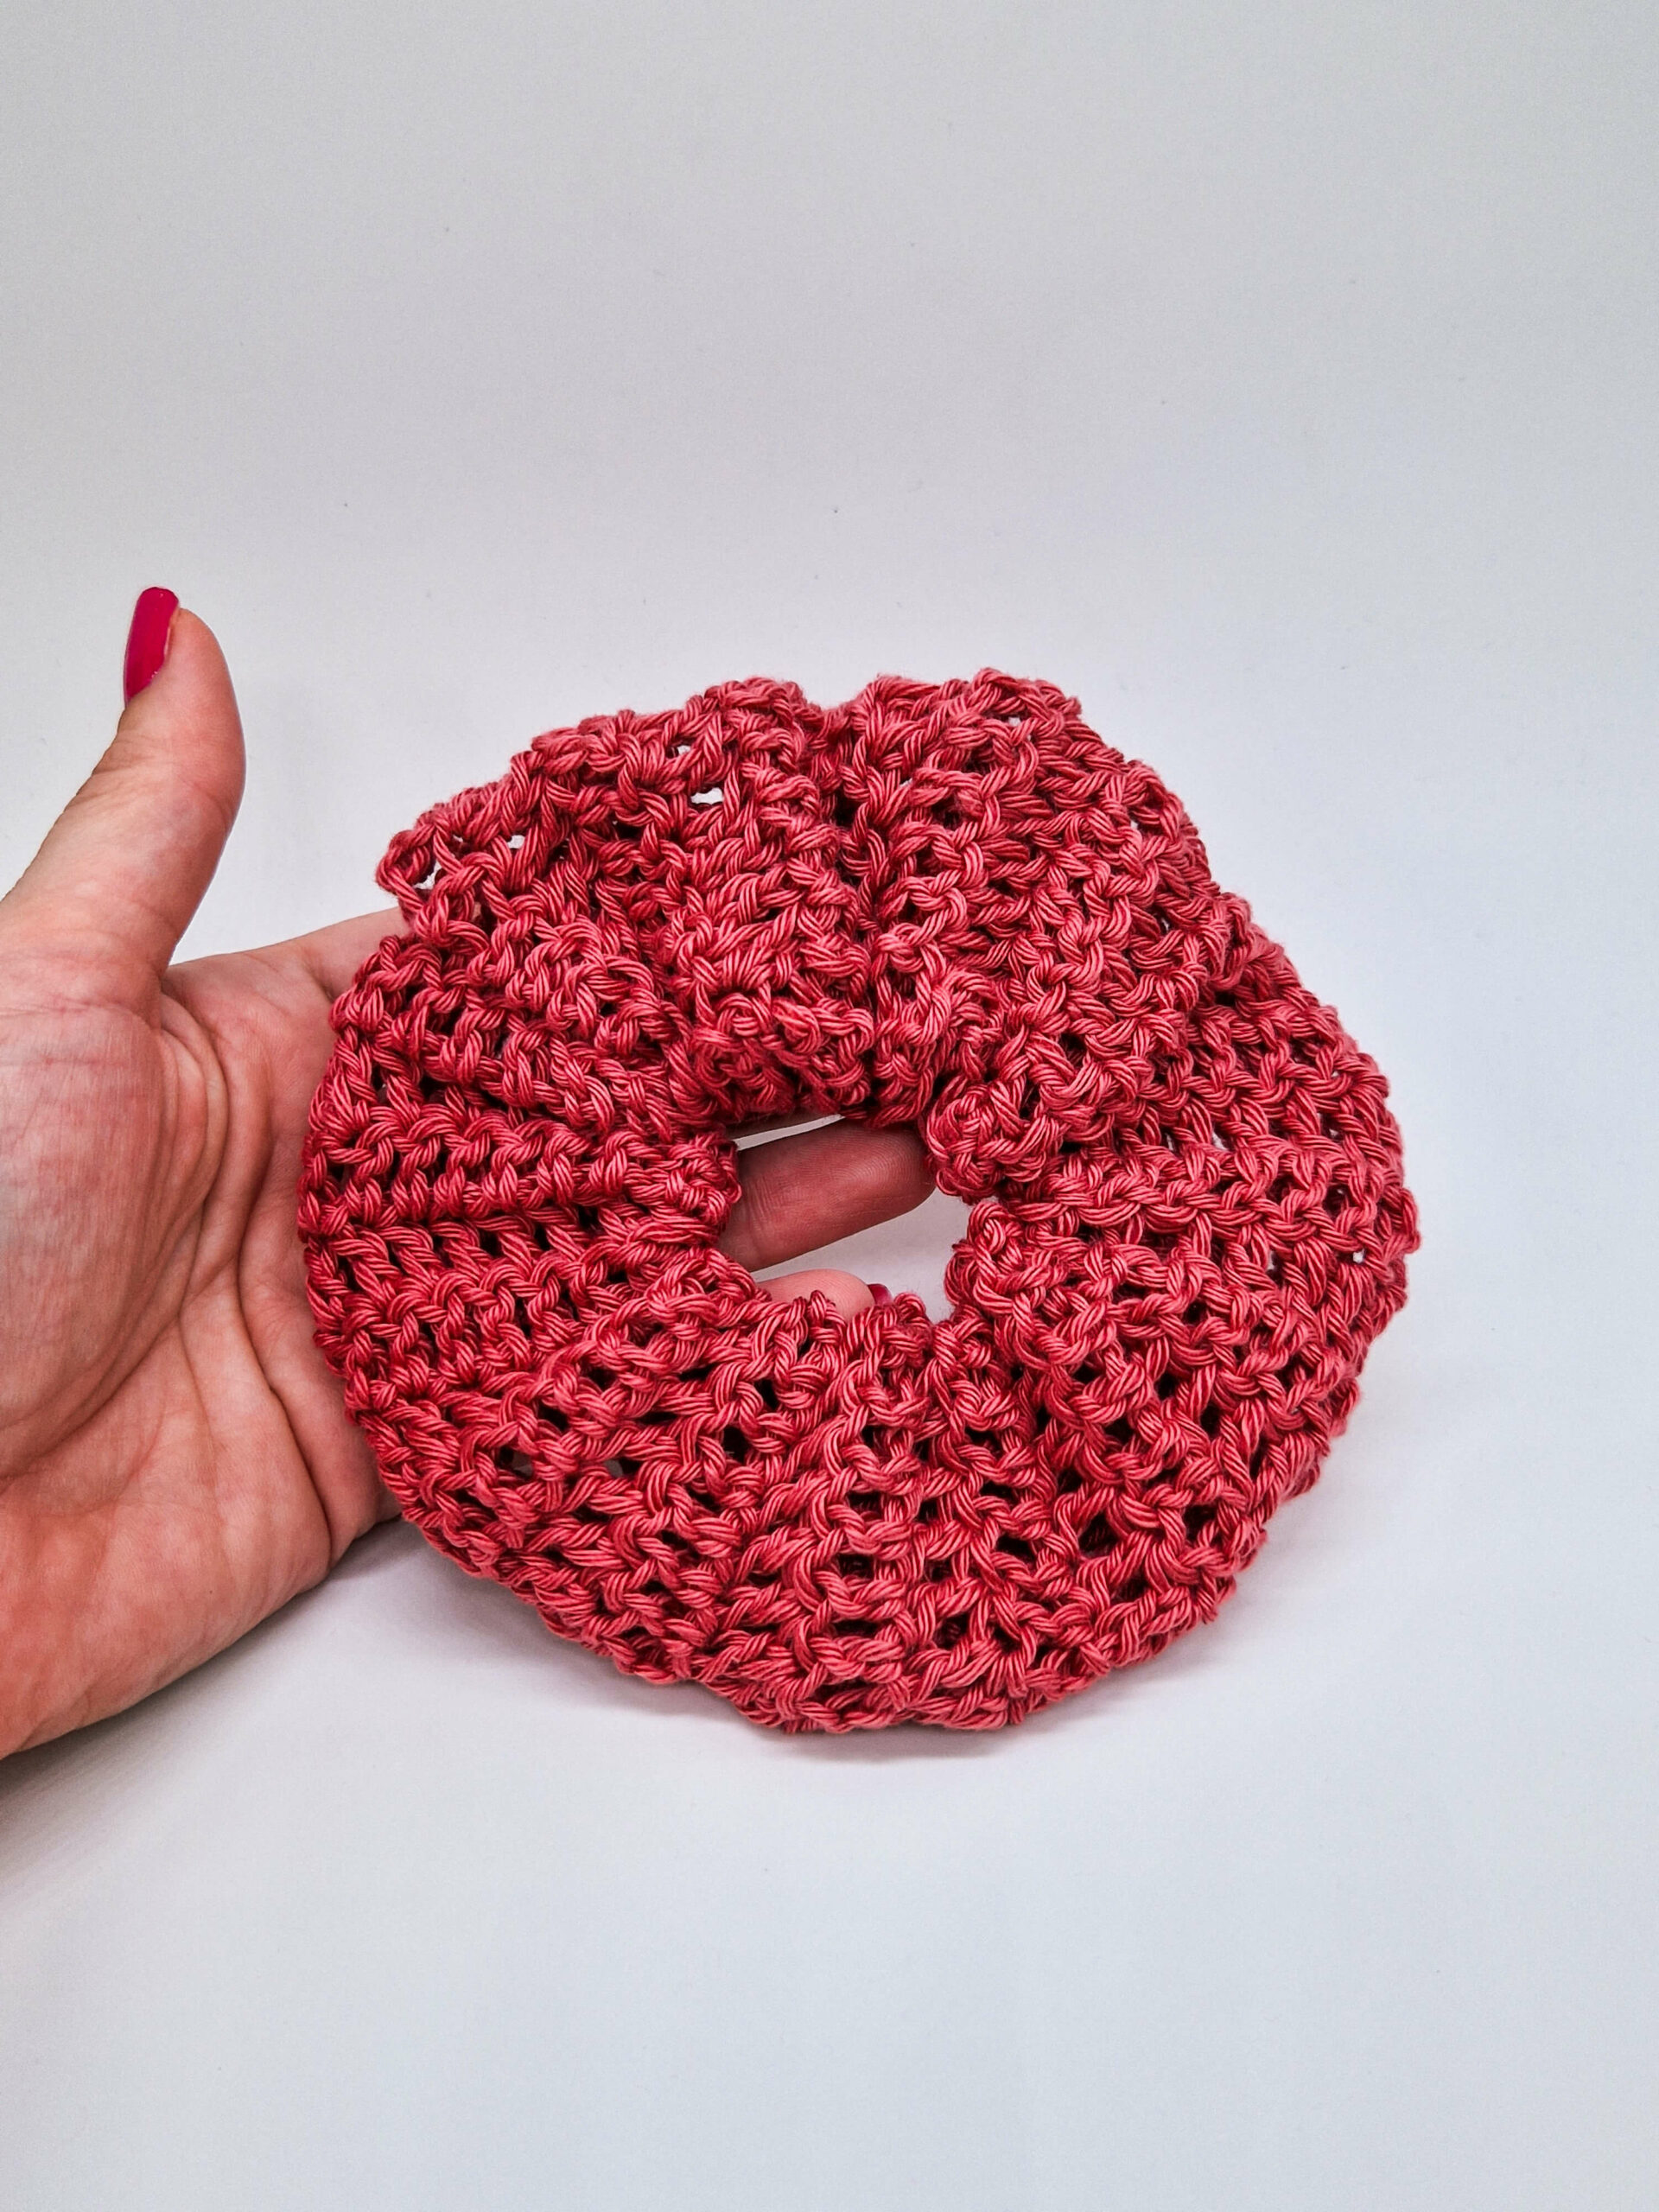 How to crochet a Double Crochet Scrunchie